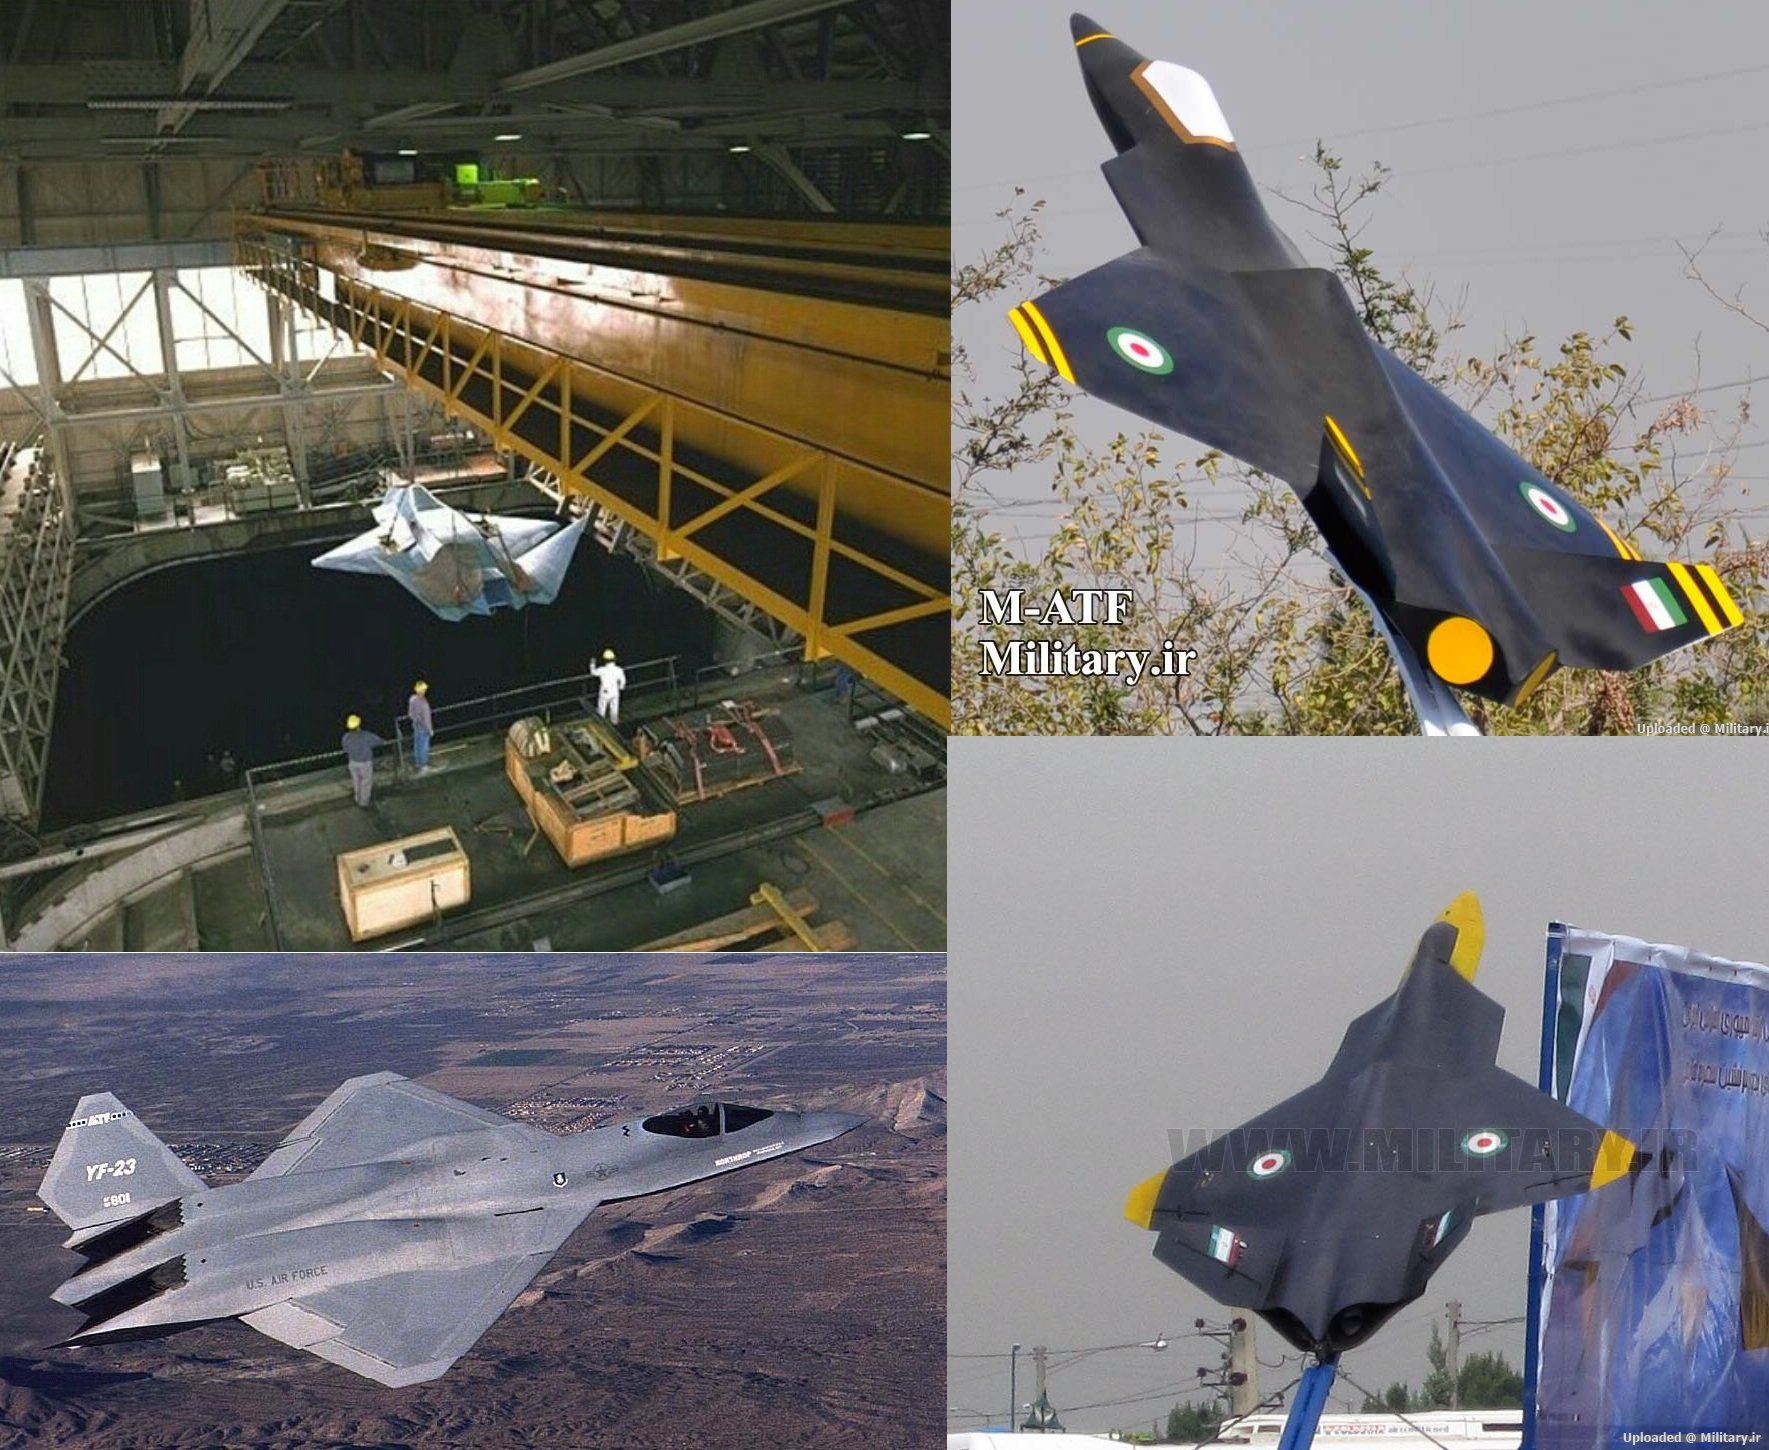 Muckup_vs_yf-23___Iranian_stealth_jet.jp